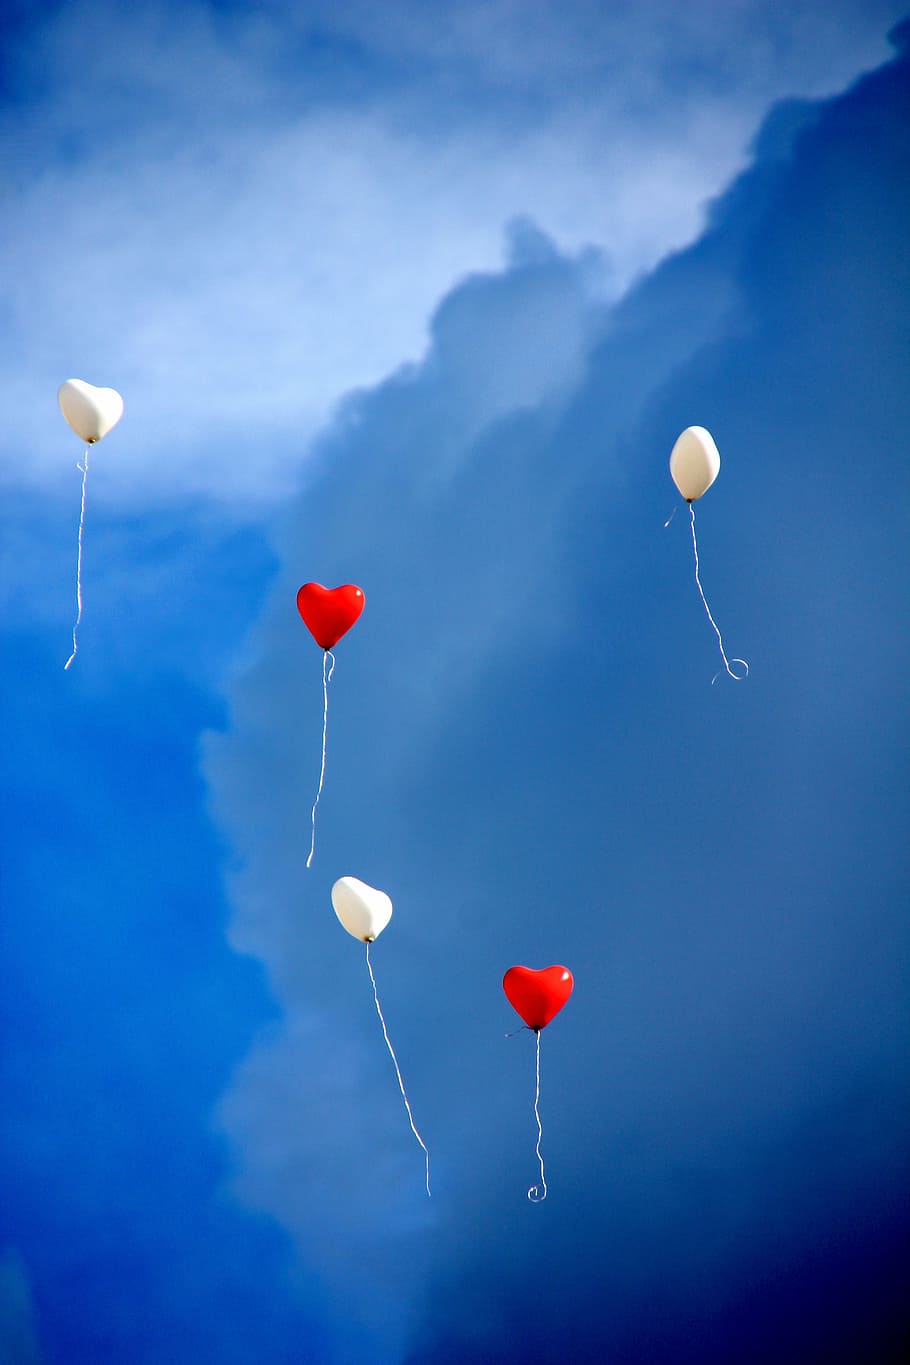 two, red, three, white, heart balloons, sky, balloon, heart, love, romance